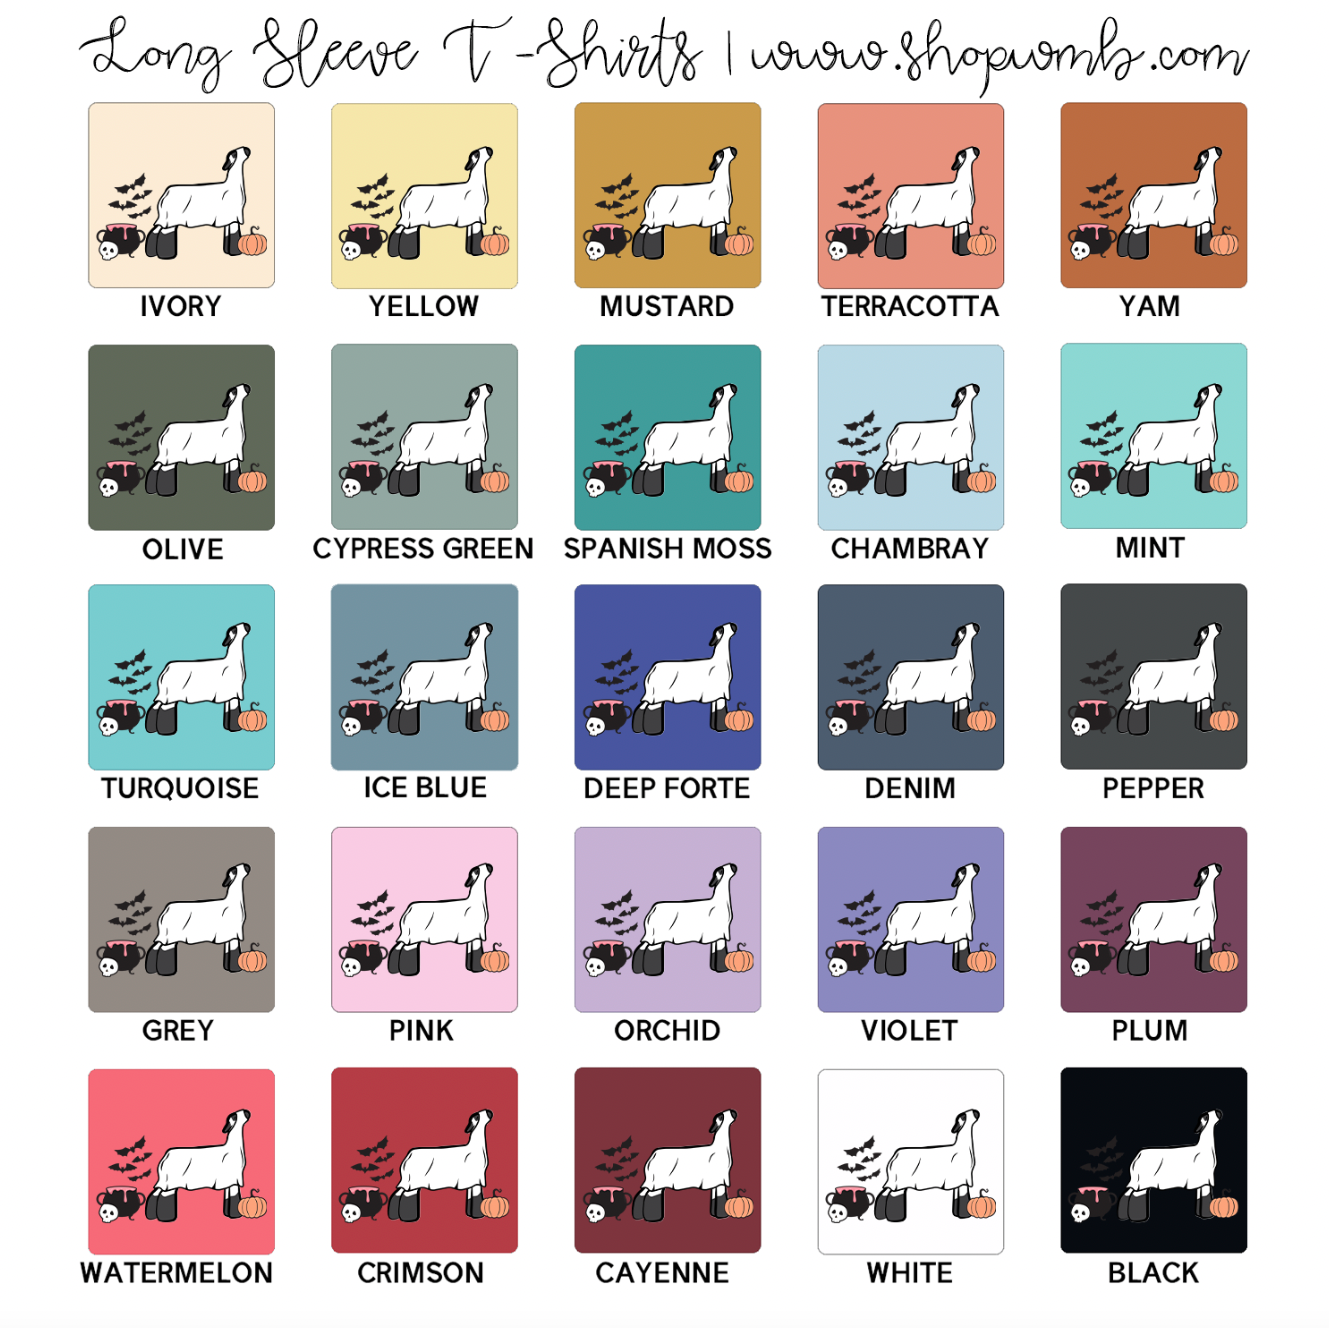 Ghost Lamb LONG SLEEVE T-Shirt (S-3XL) - Multiple Colors!